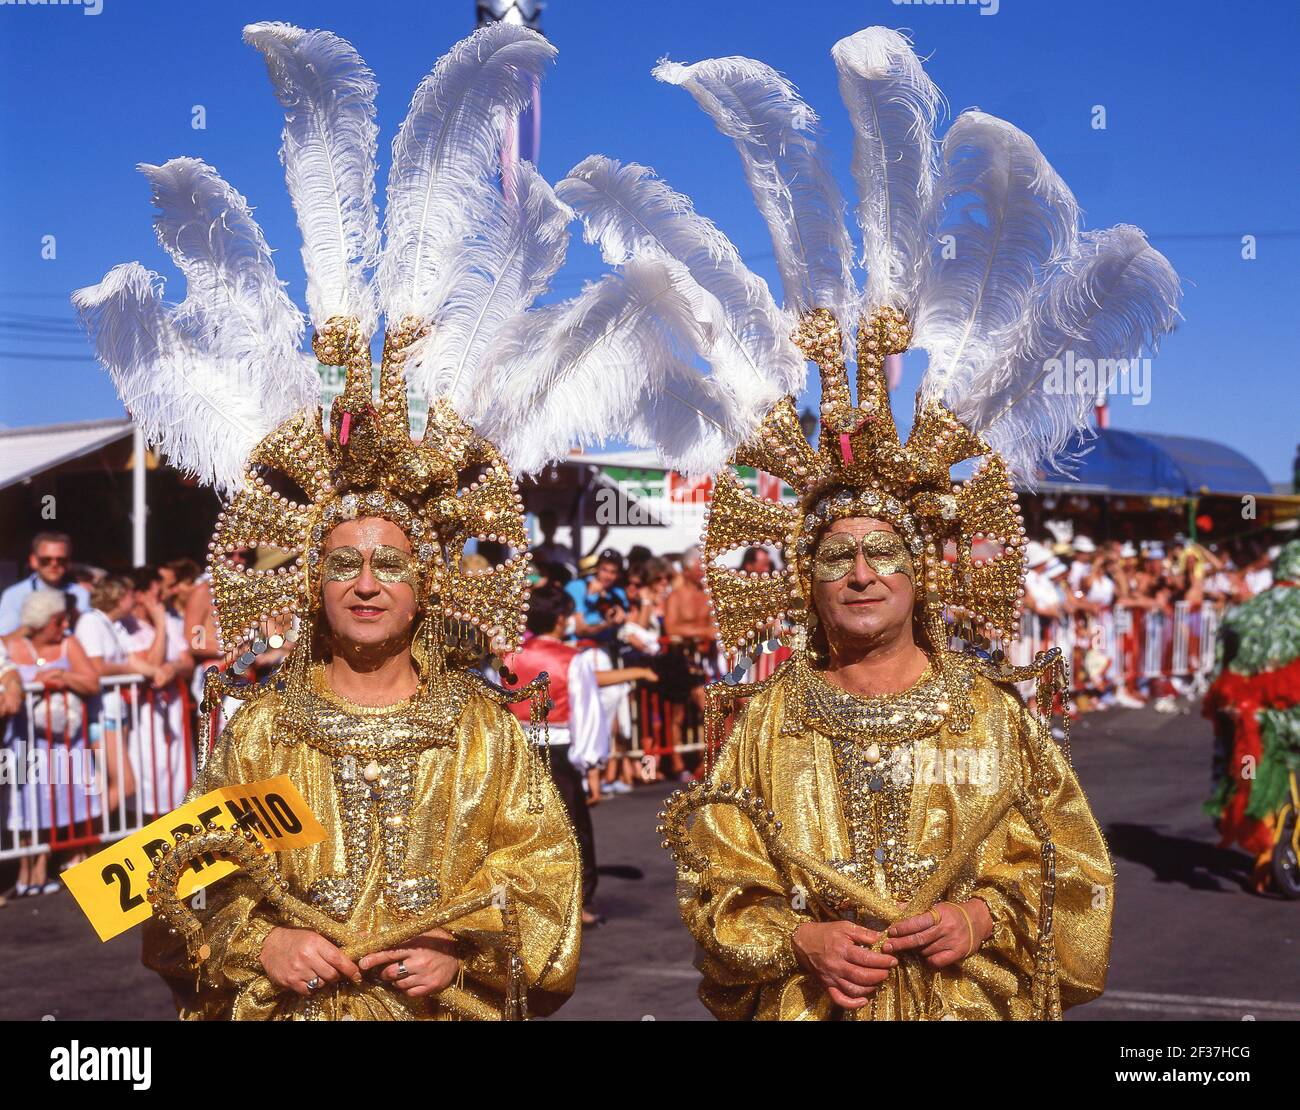 Costumi colorati, Carnevale di Santa Cruz de Tenerife, Santa Cruz, Tenerife, Isole Canarie, Spagna Foto Stock